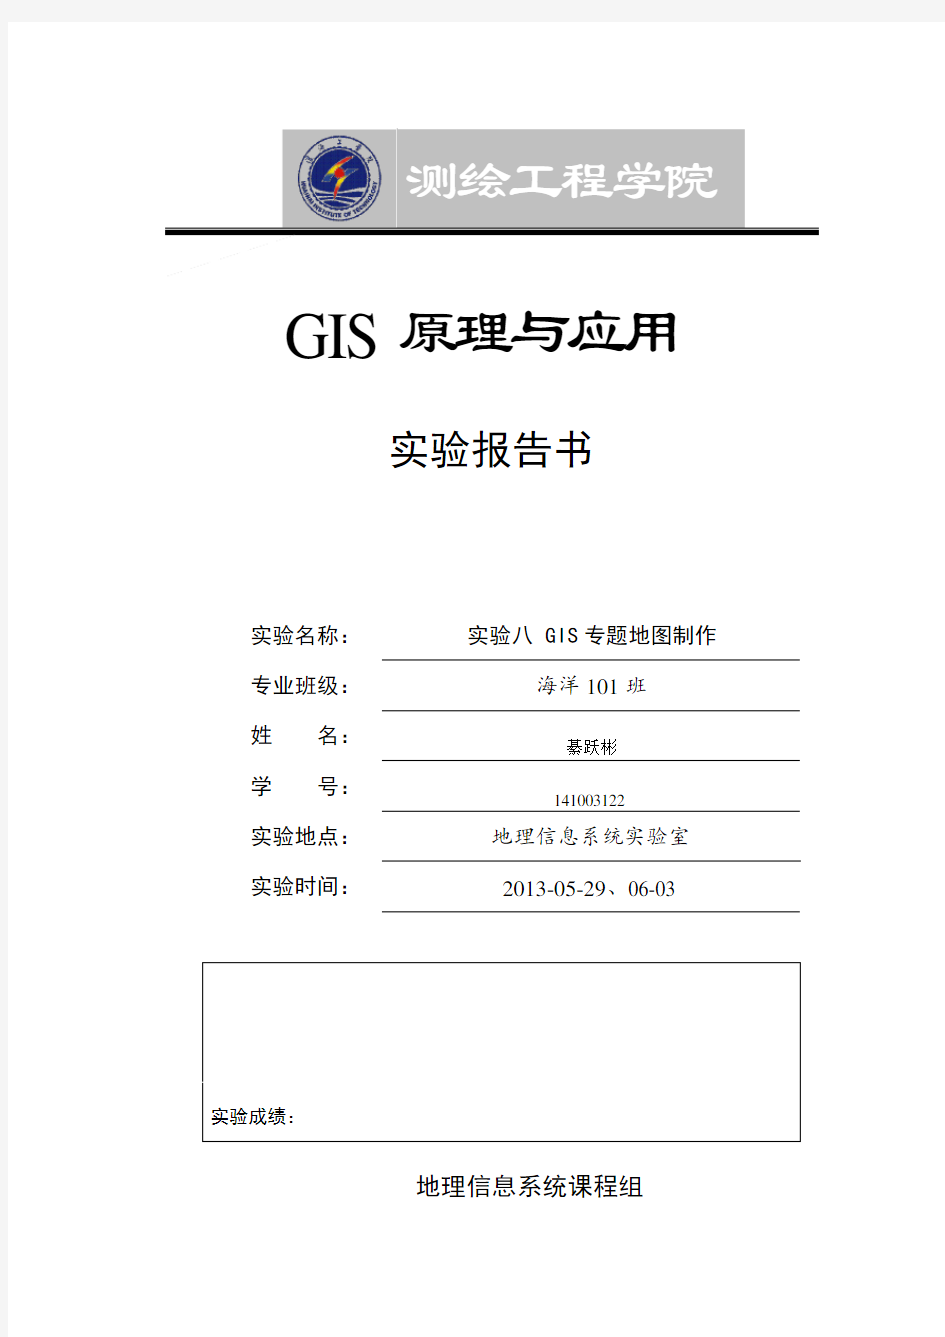 GIS原理与应用实验报告书-实验八 GIS专题地图制作